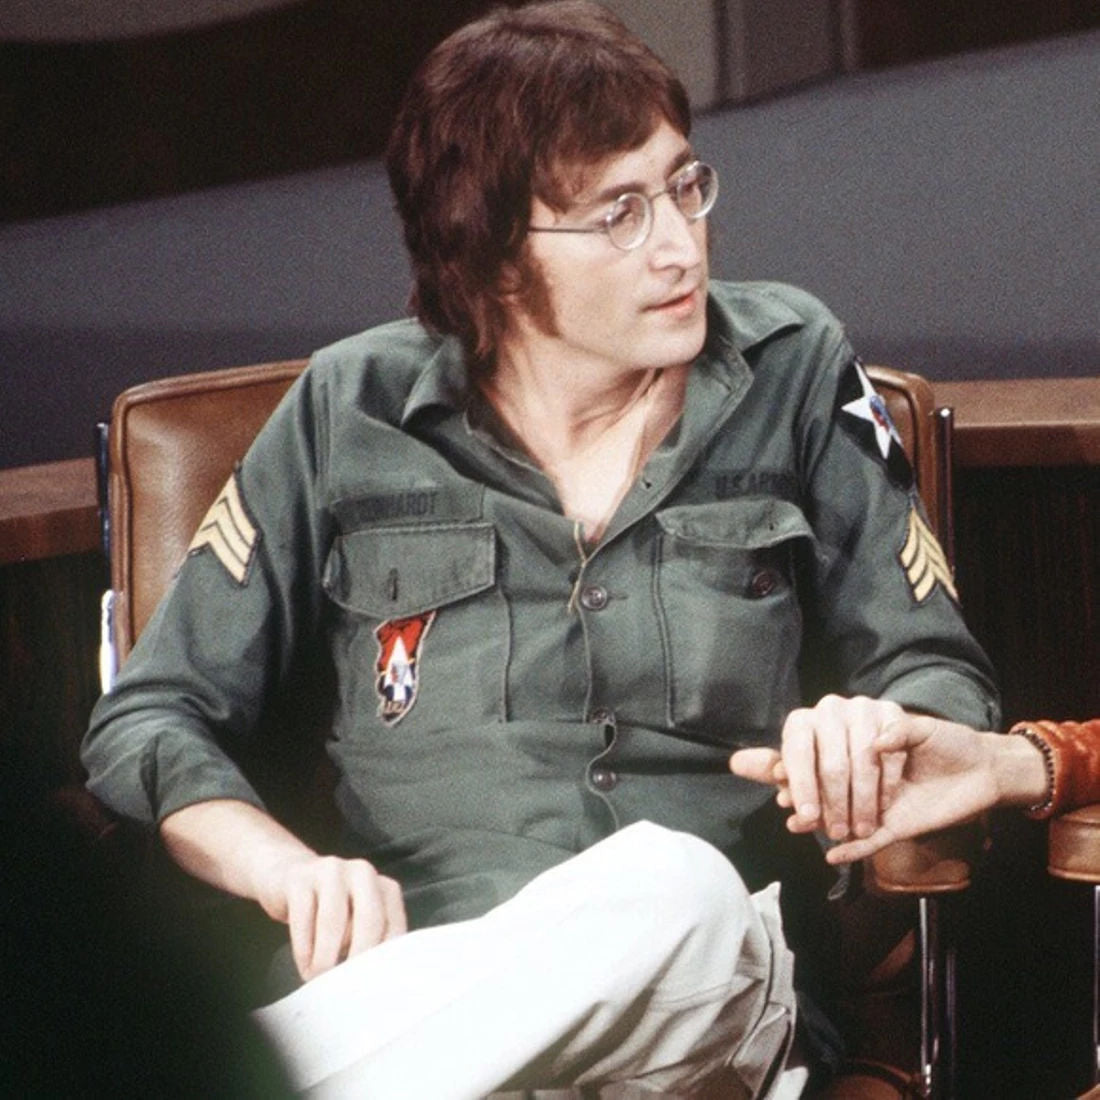 John Lennon Army Jacket Costume - Beatles Revolution Replica